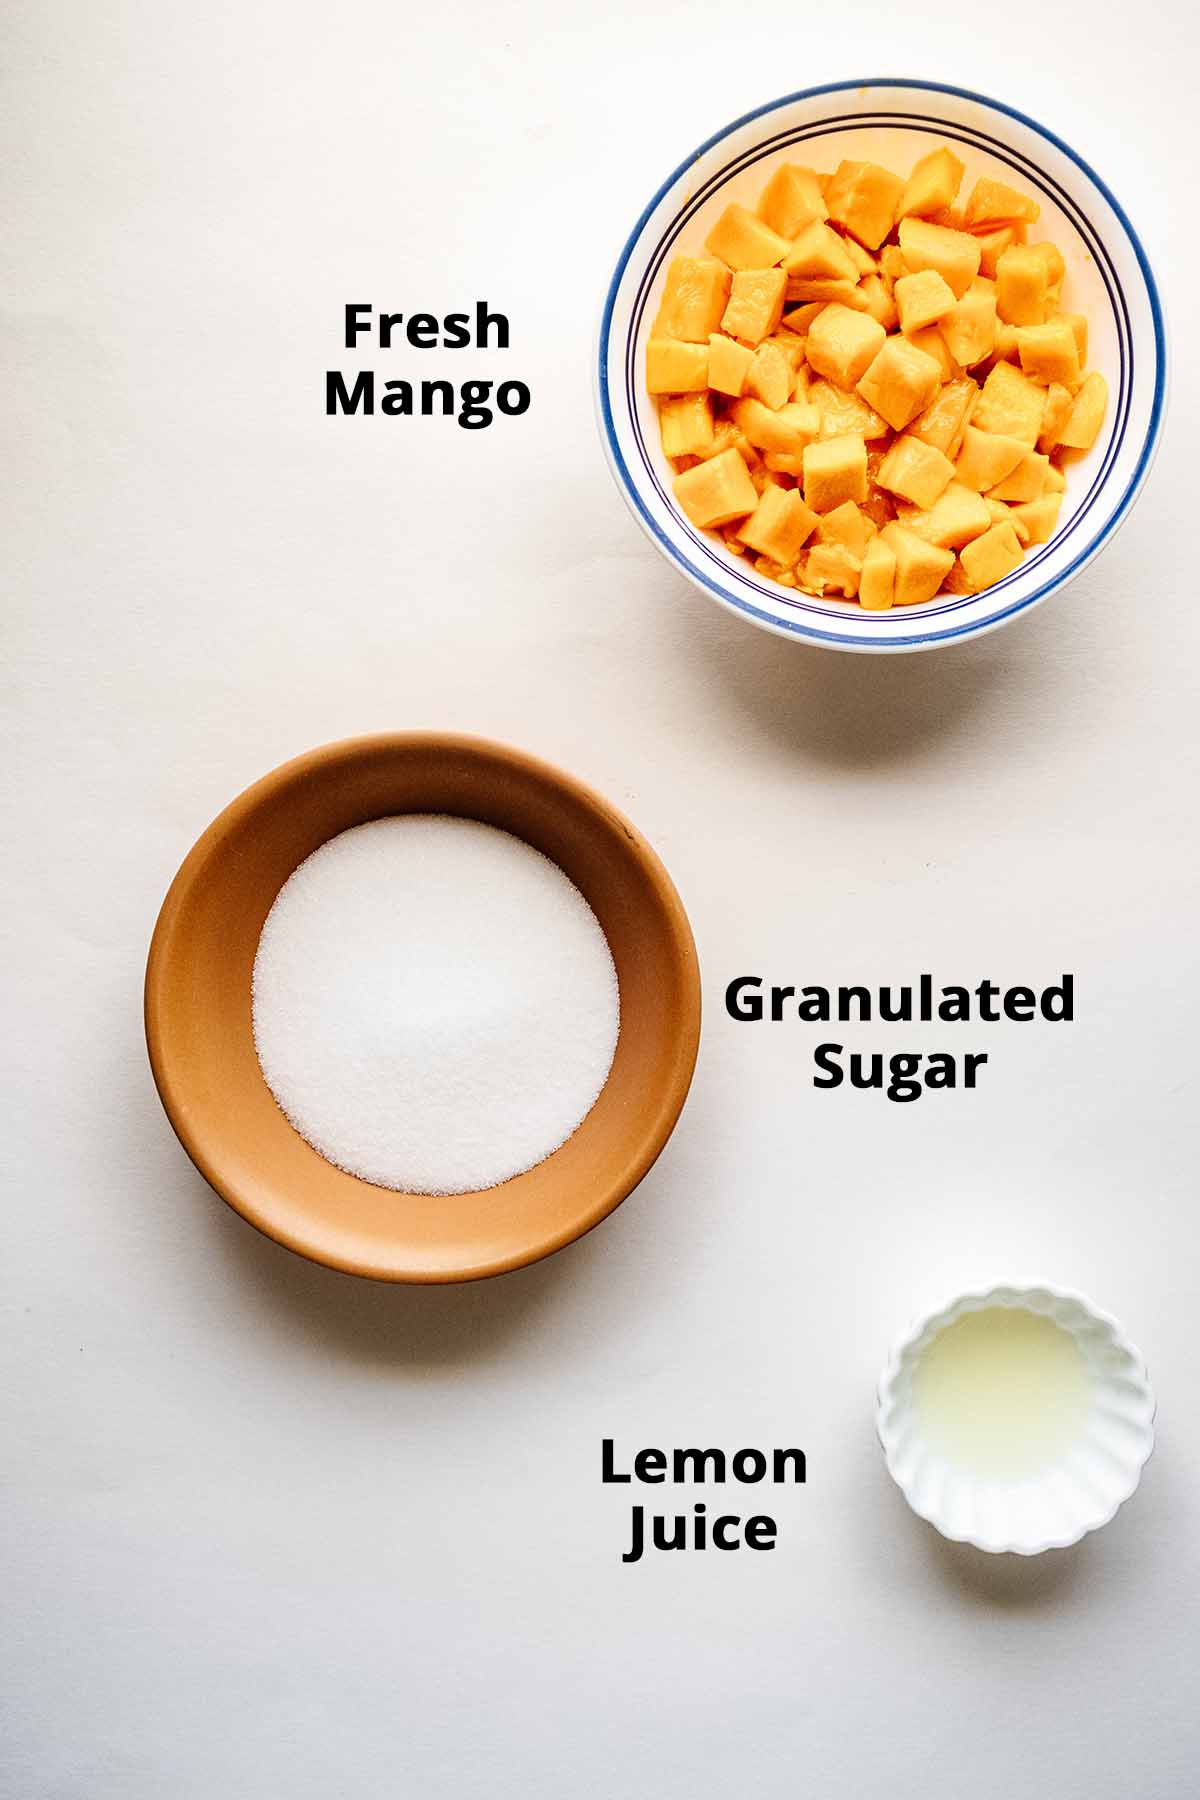 Mango compote ingredients